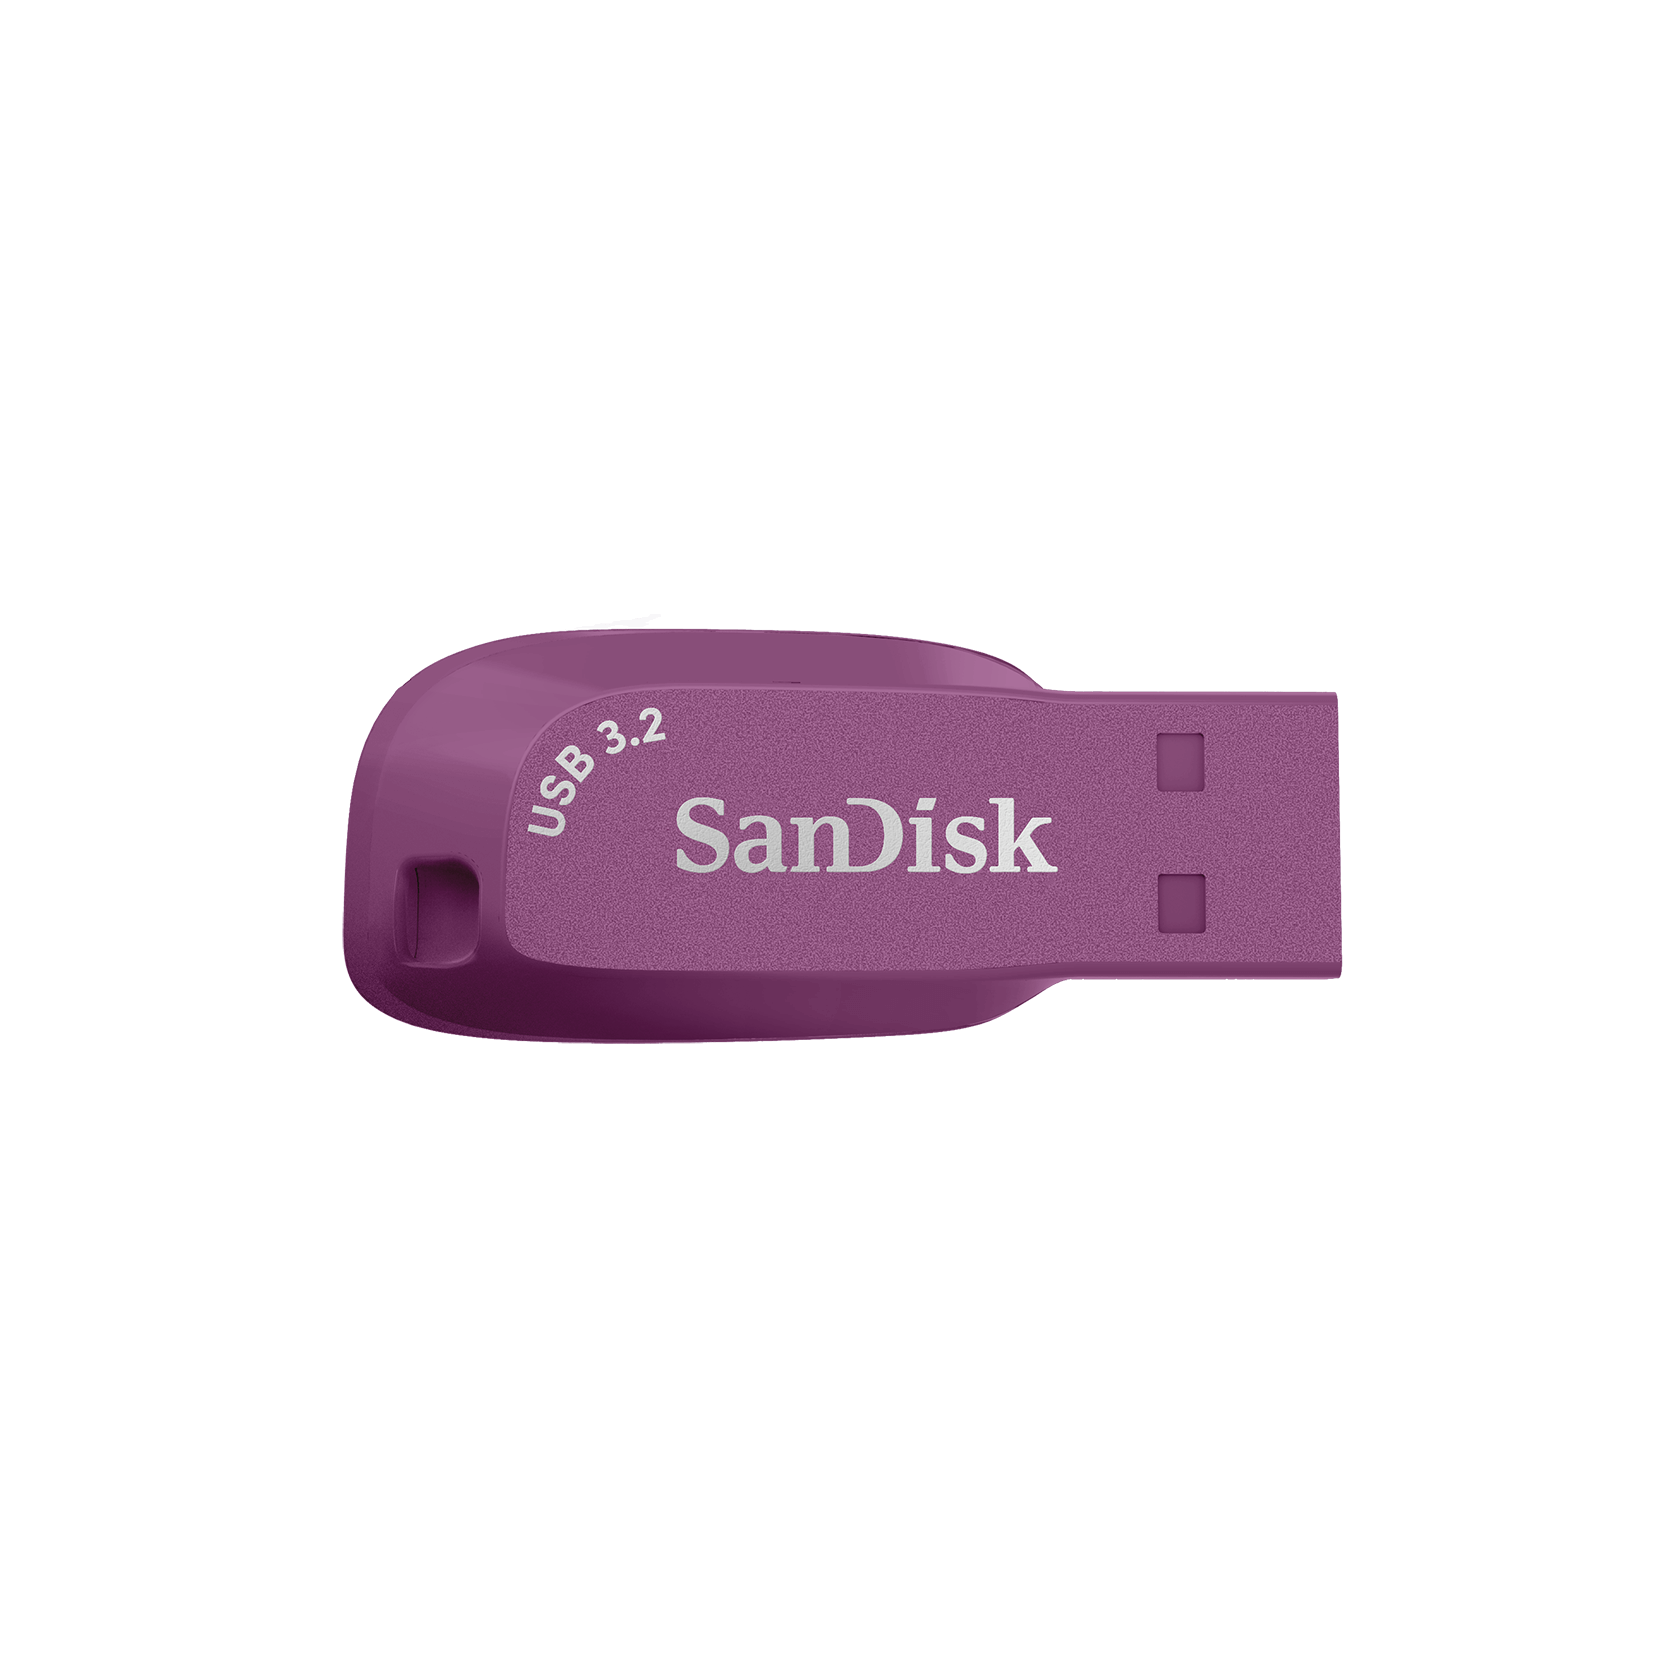 SanDisk Ultra Shift USB 3.2 Gen 1 Flash Drive - 32GB - SDCZ410-032G-G46CO